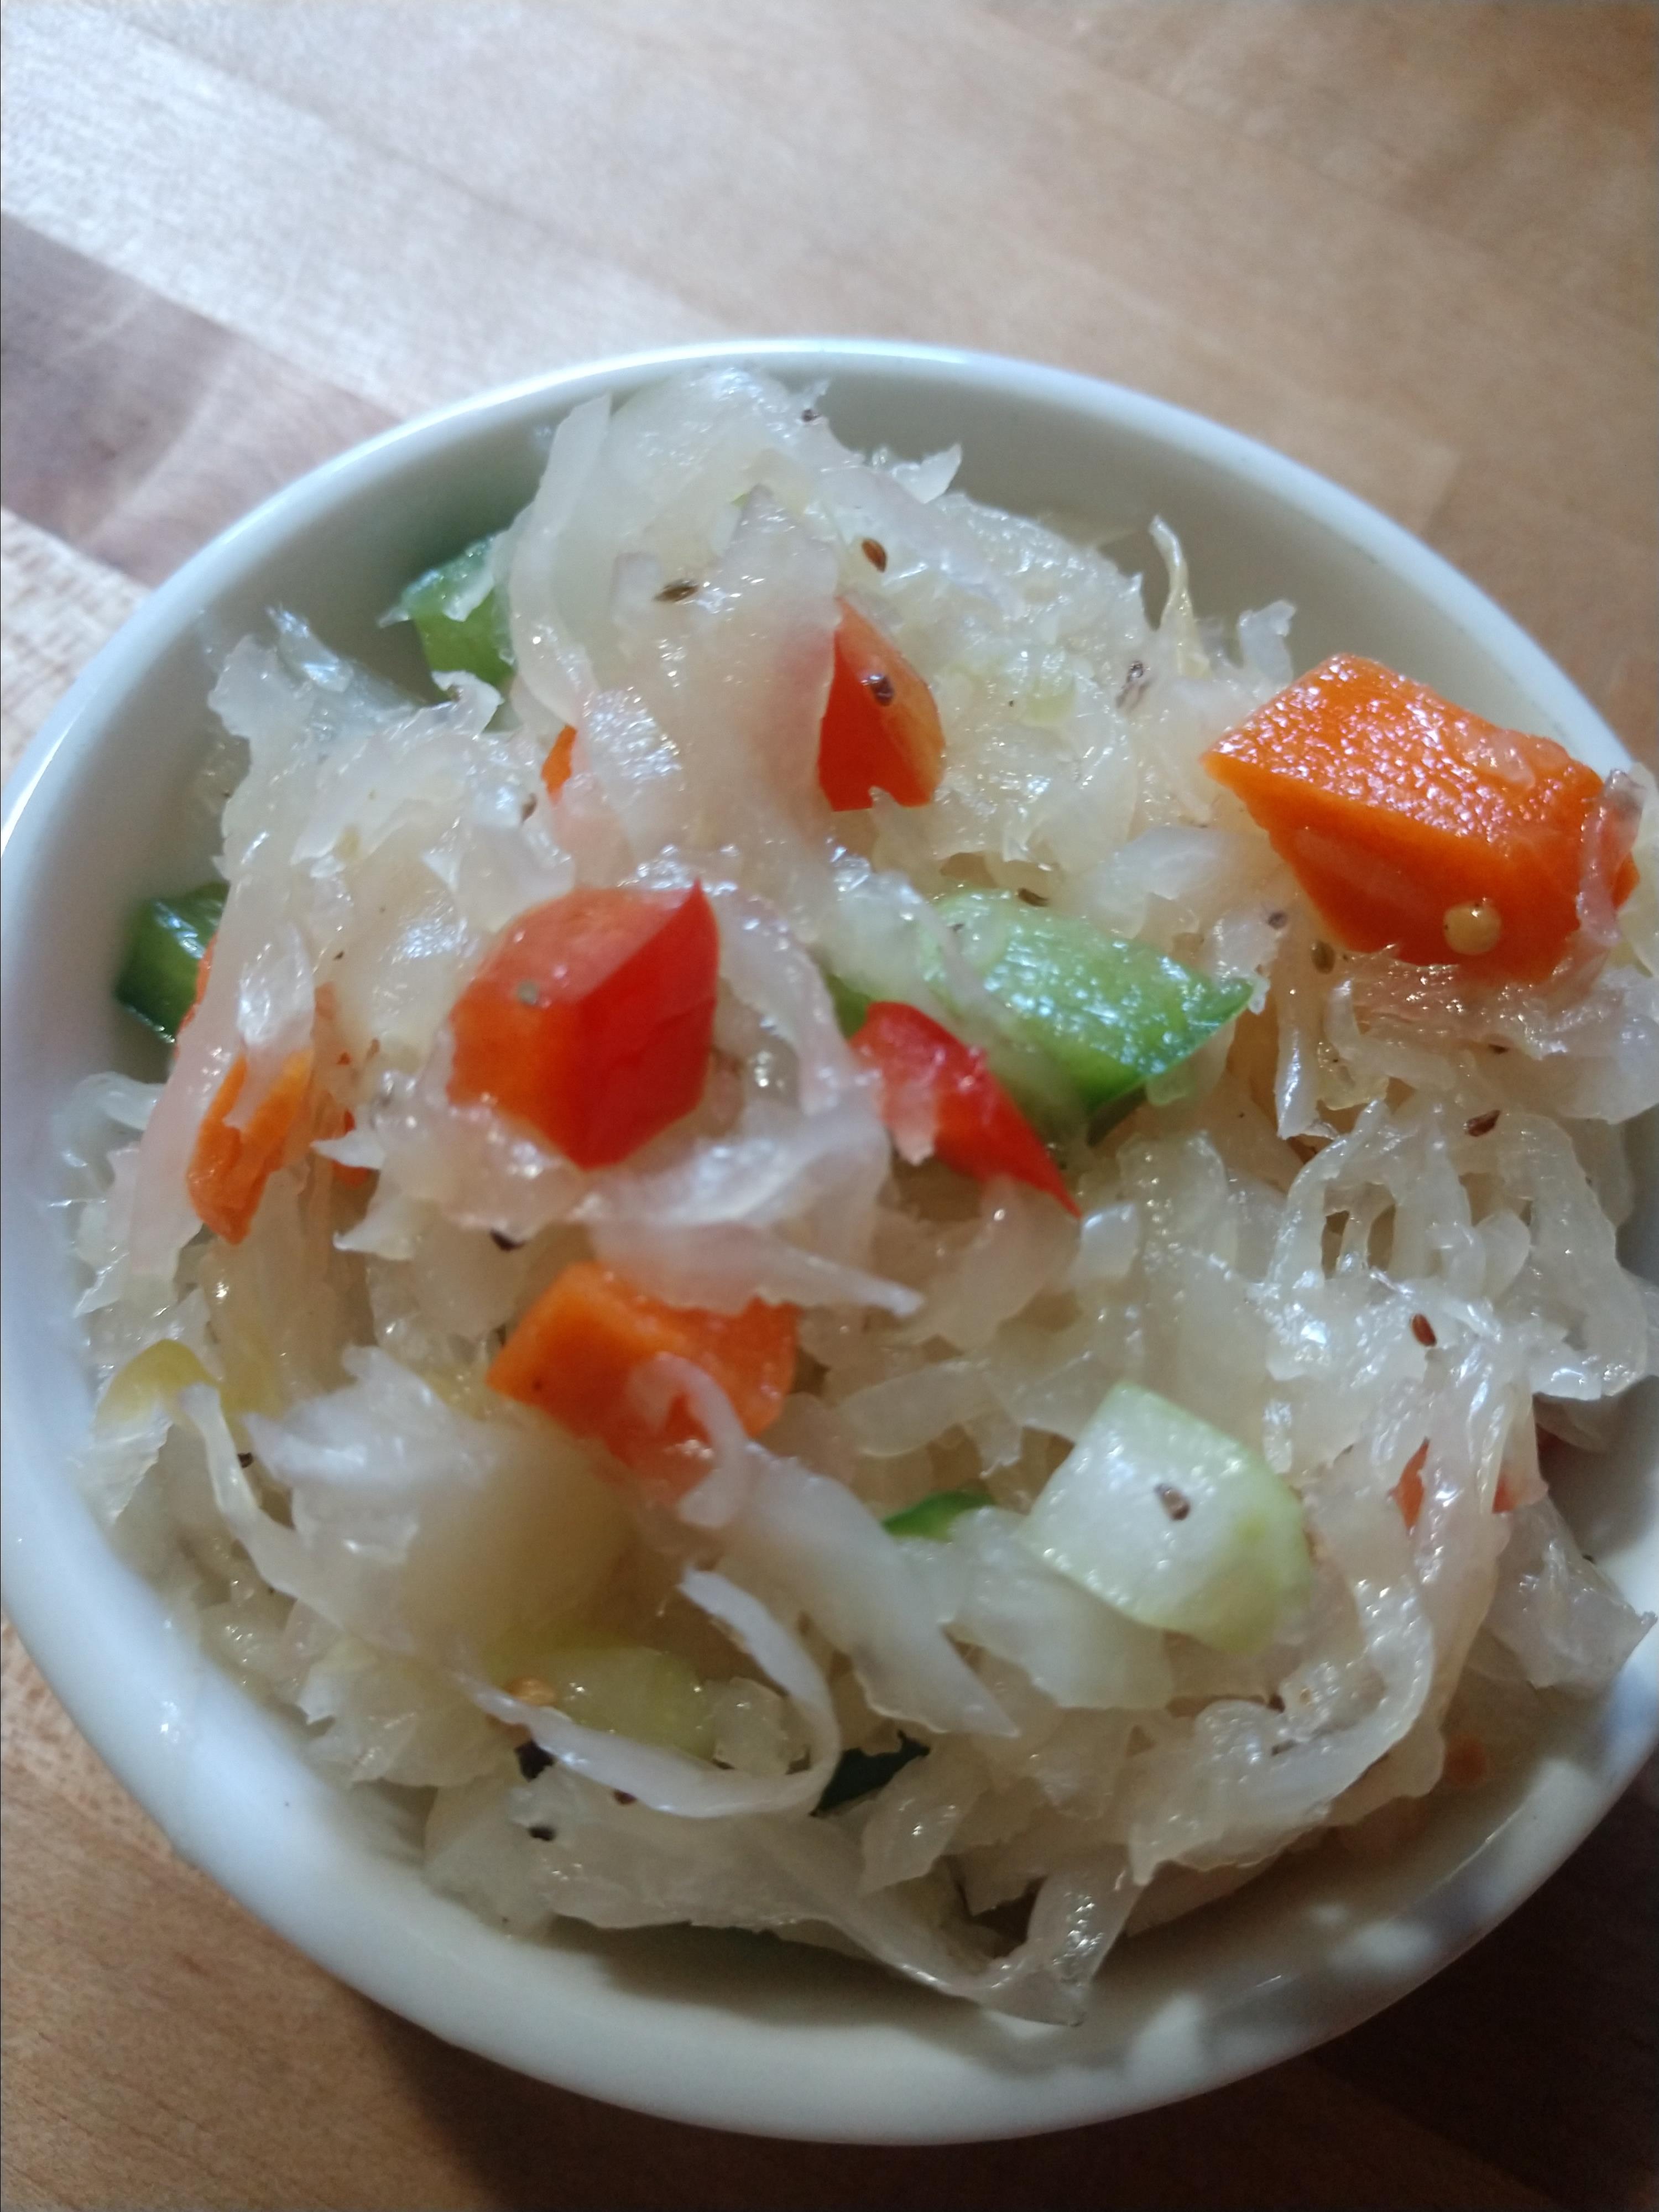 Sauerkraut Salad Recipe | Allrecipes